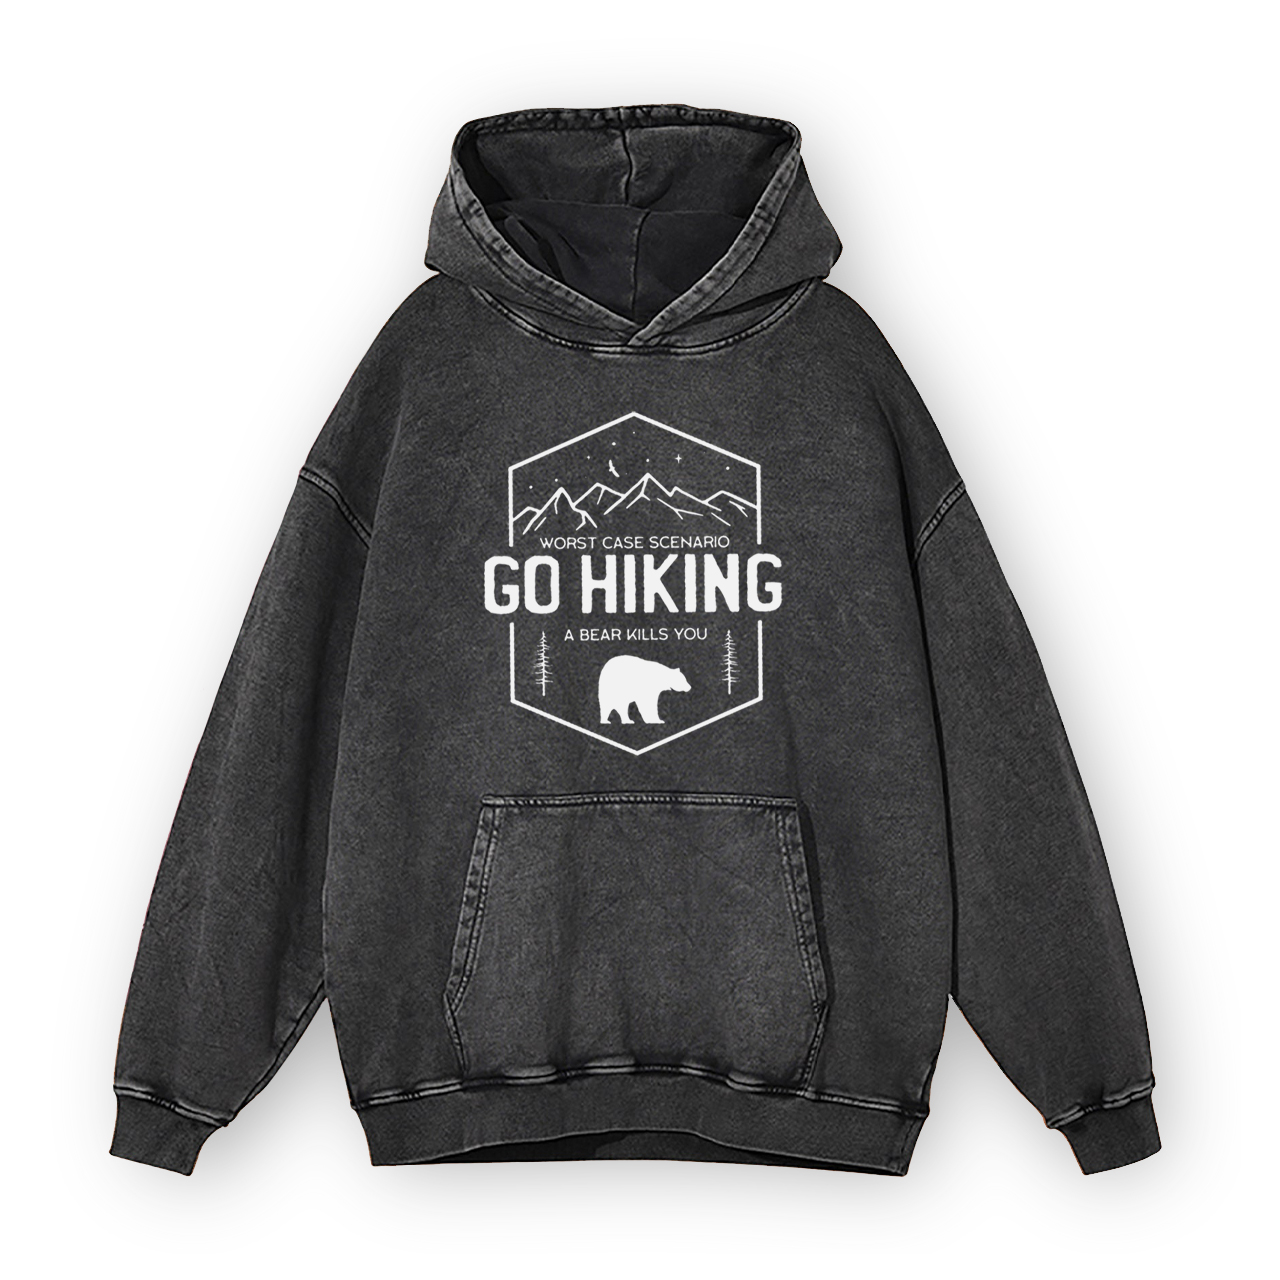 Go Hiking Bear Kills You Garment-Dye Hoodies